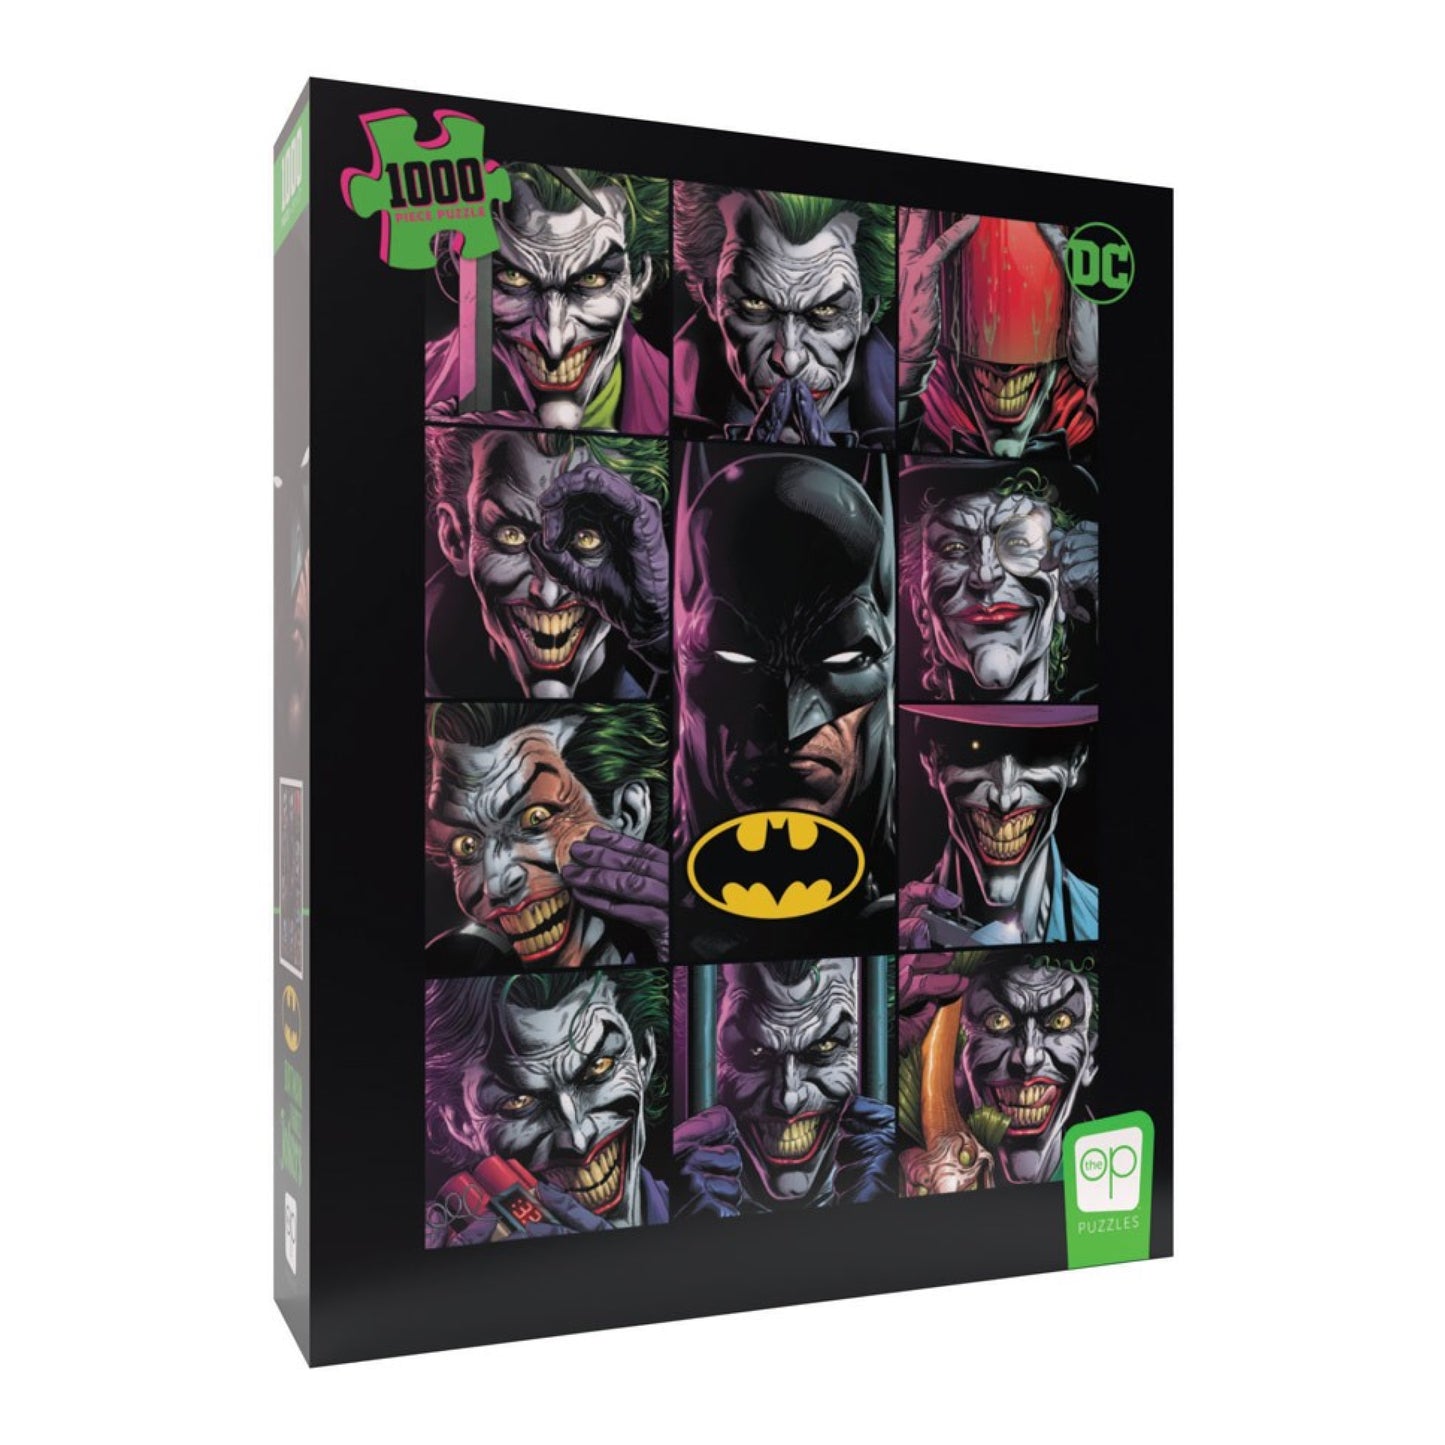 Batman "Three Jokers" 1000pc Puzzle